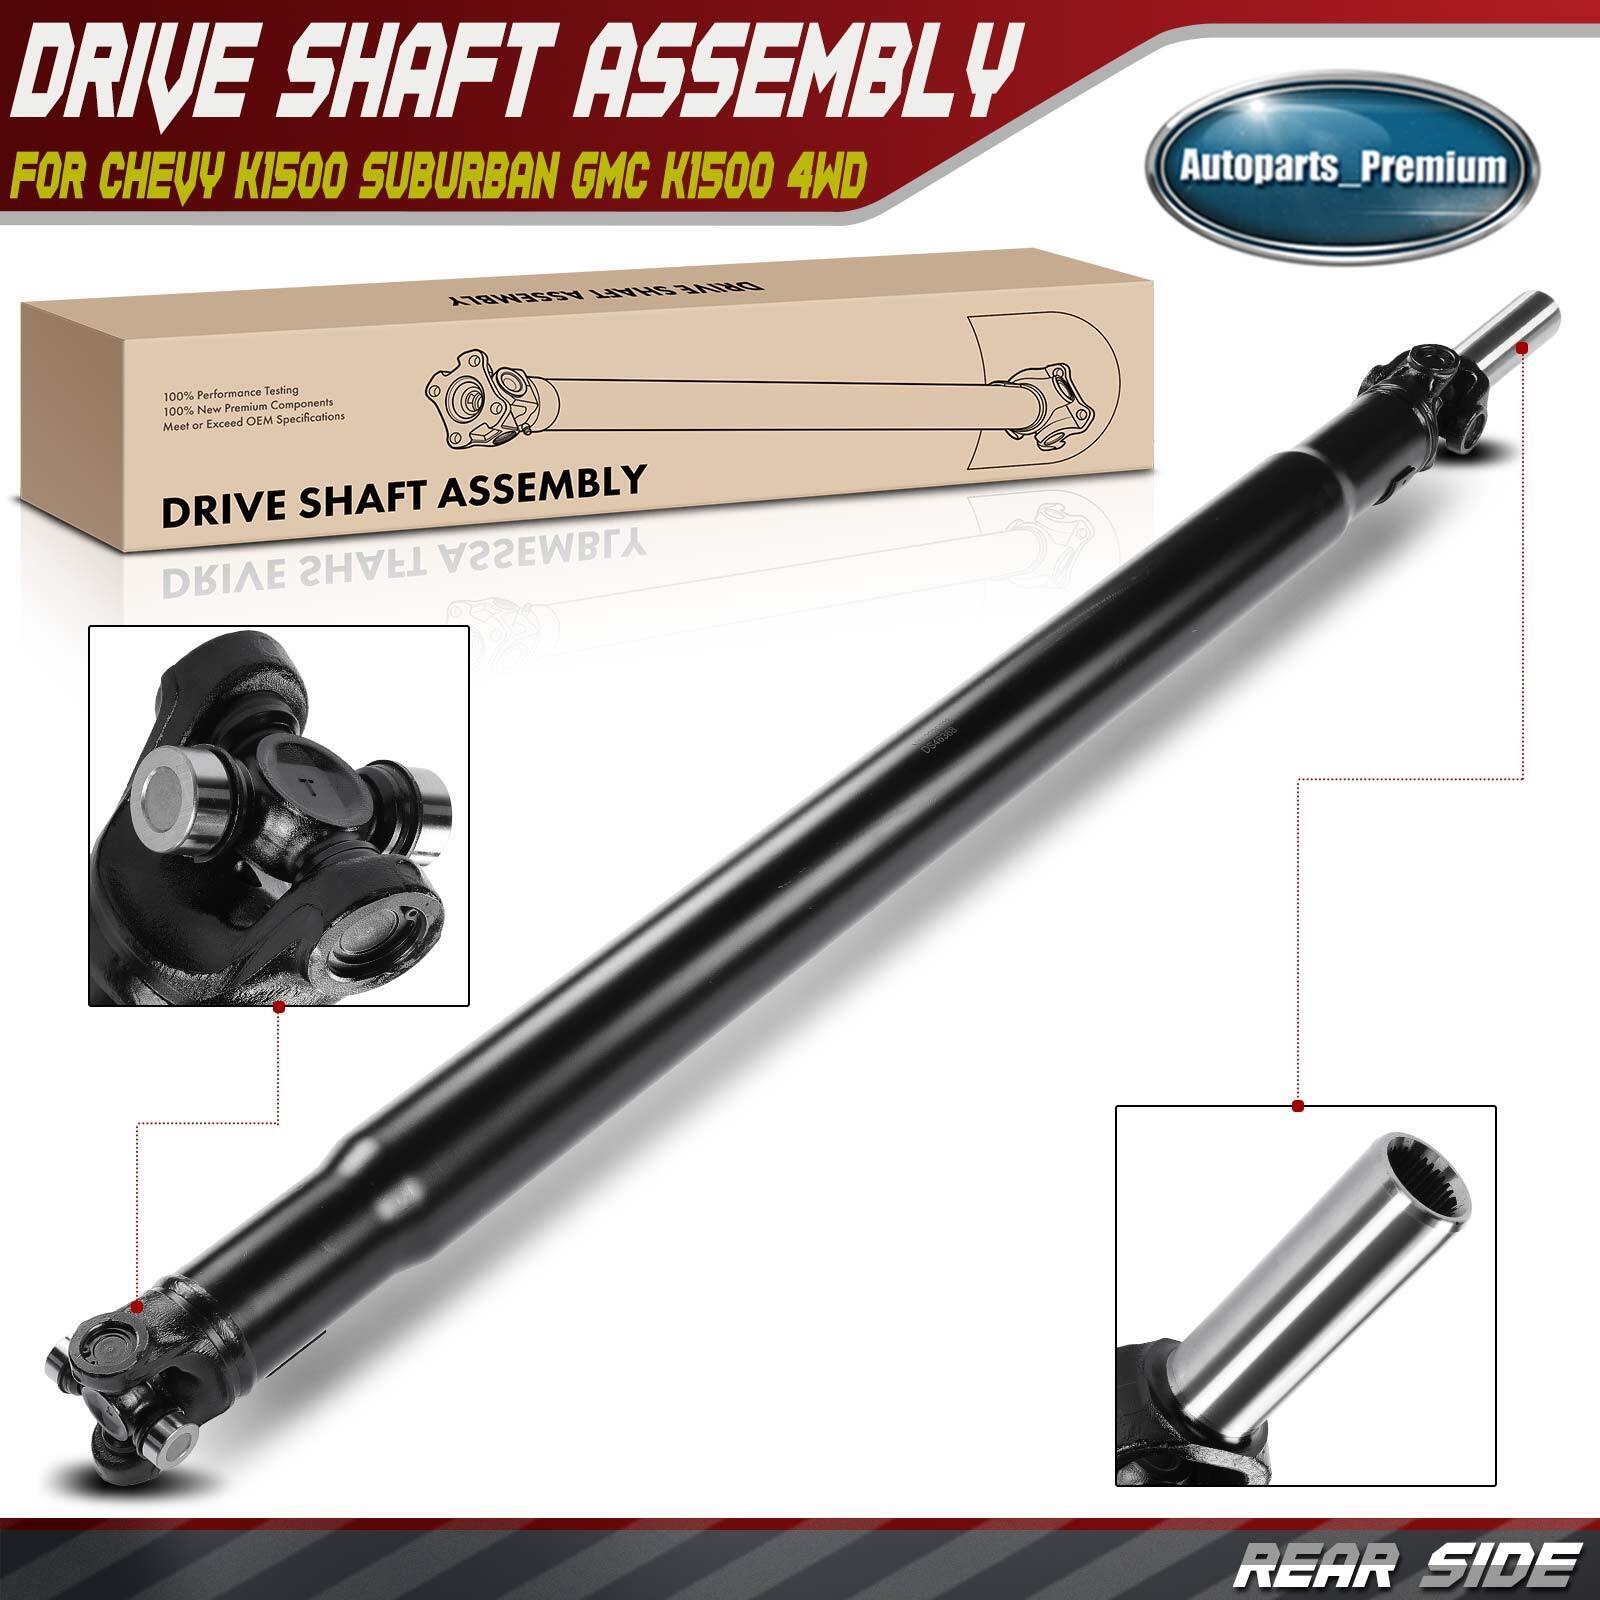 Rear Driveshaft Prop Shaft Assembly for Chevrolet K1500 Suburban GMC K1500 4WD